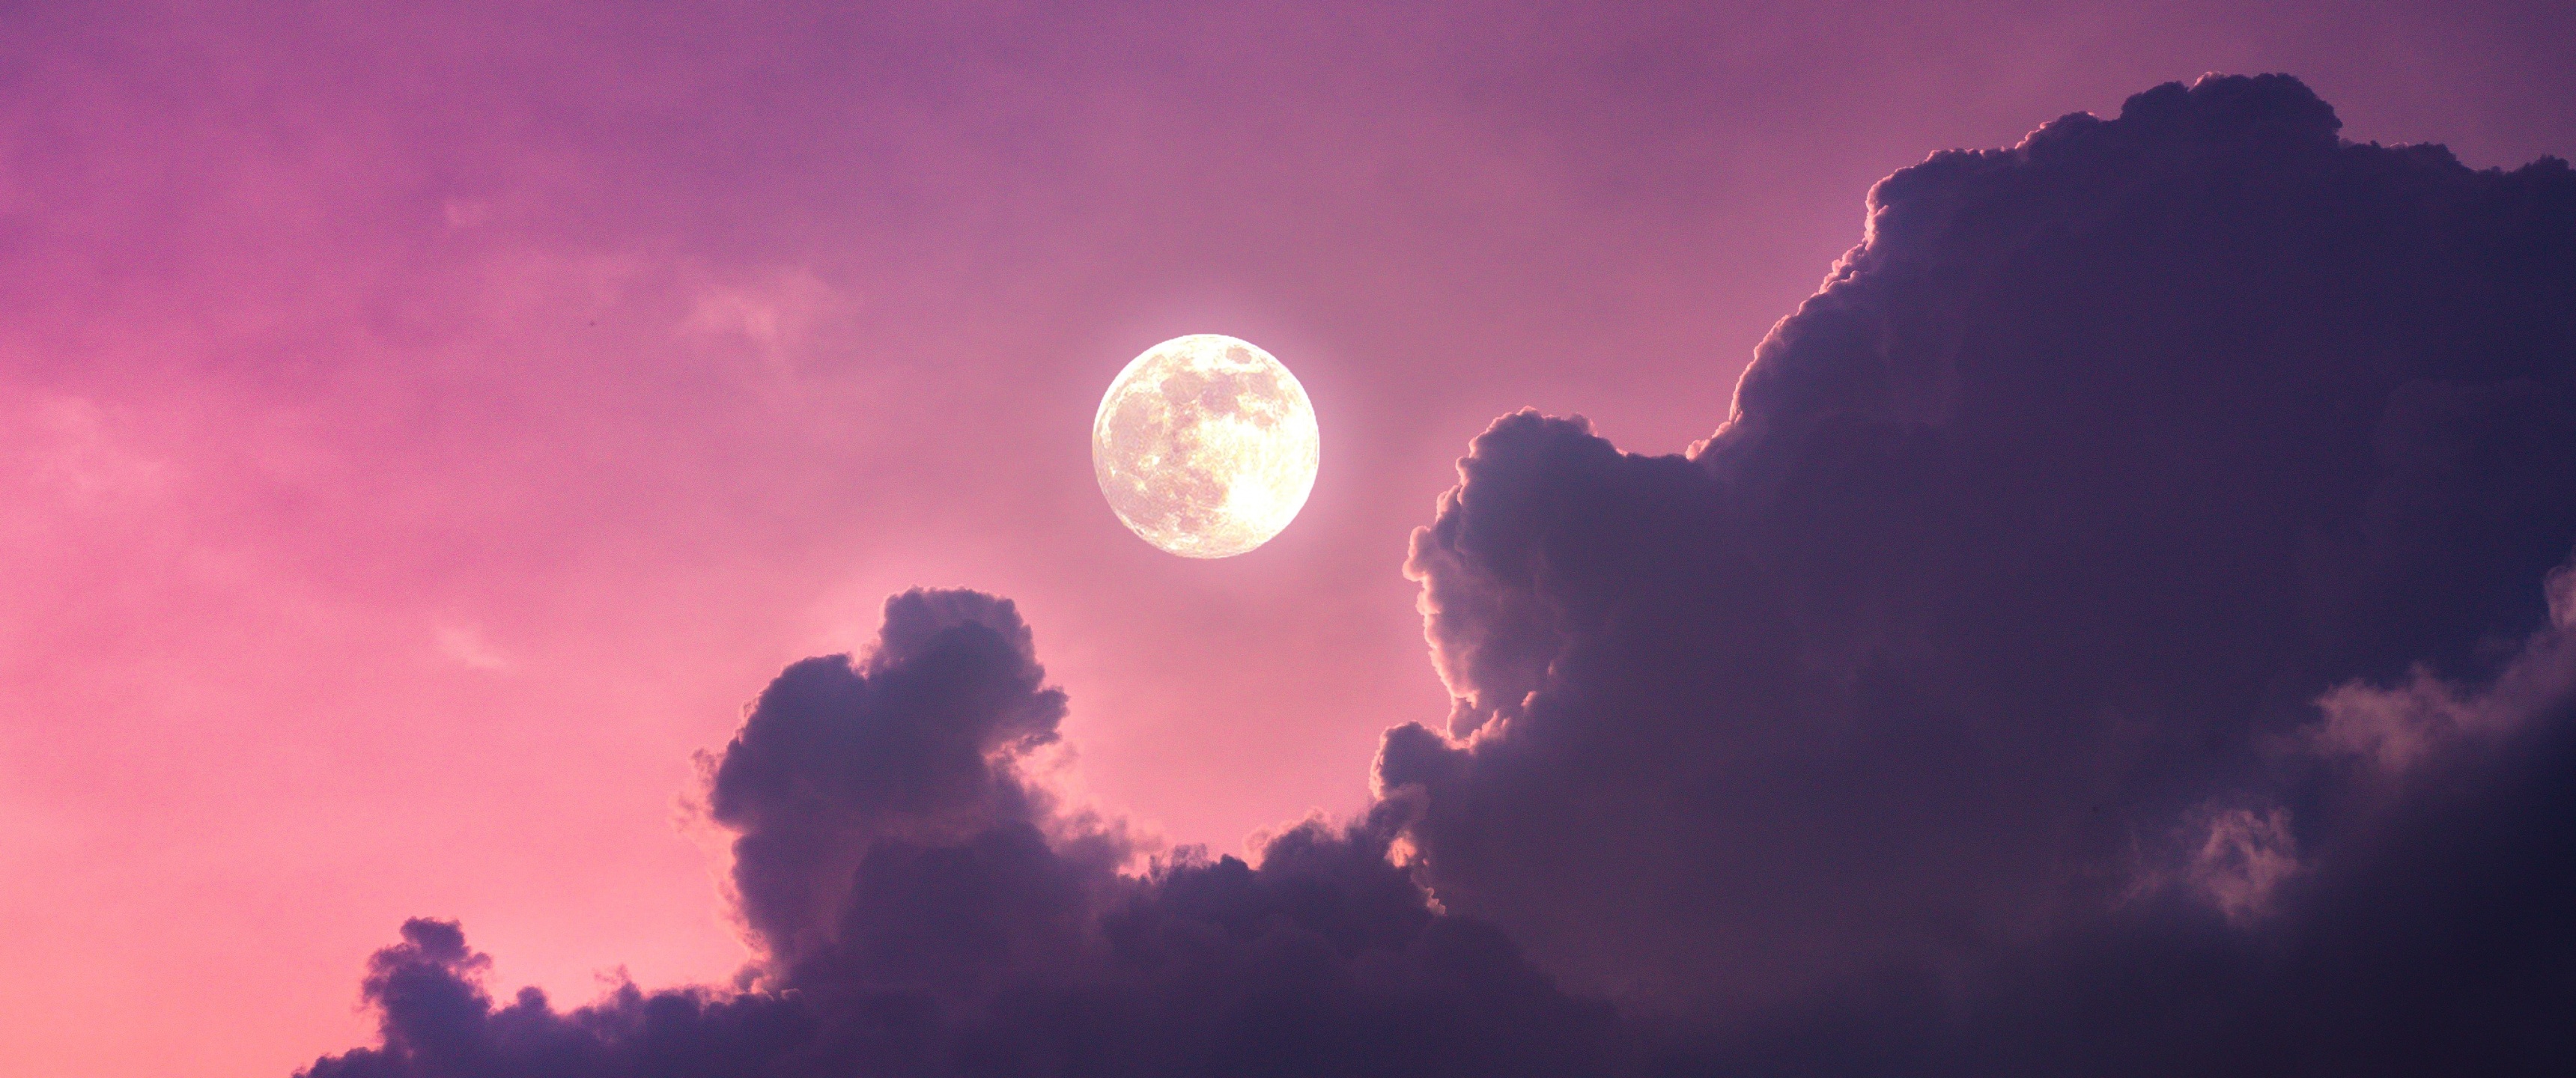 Full moon Wallpaper 4K, Clouds, Pink sky, Nature, #1653